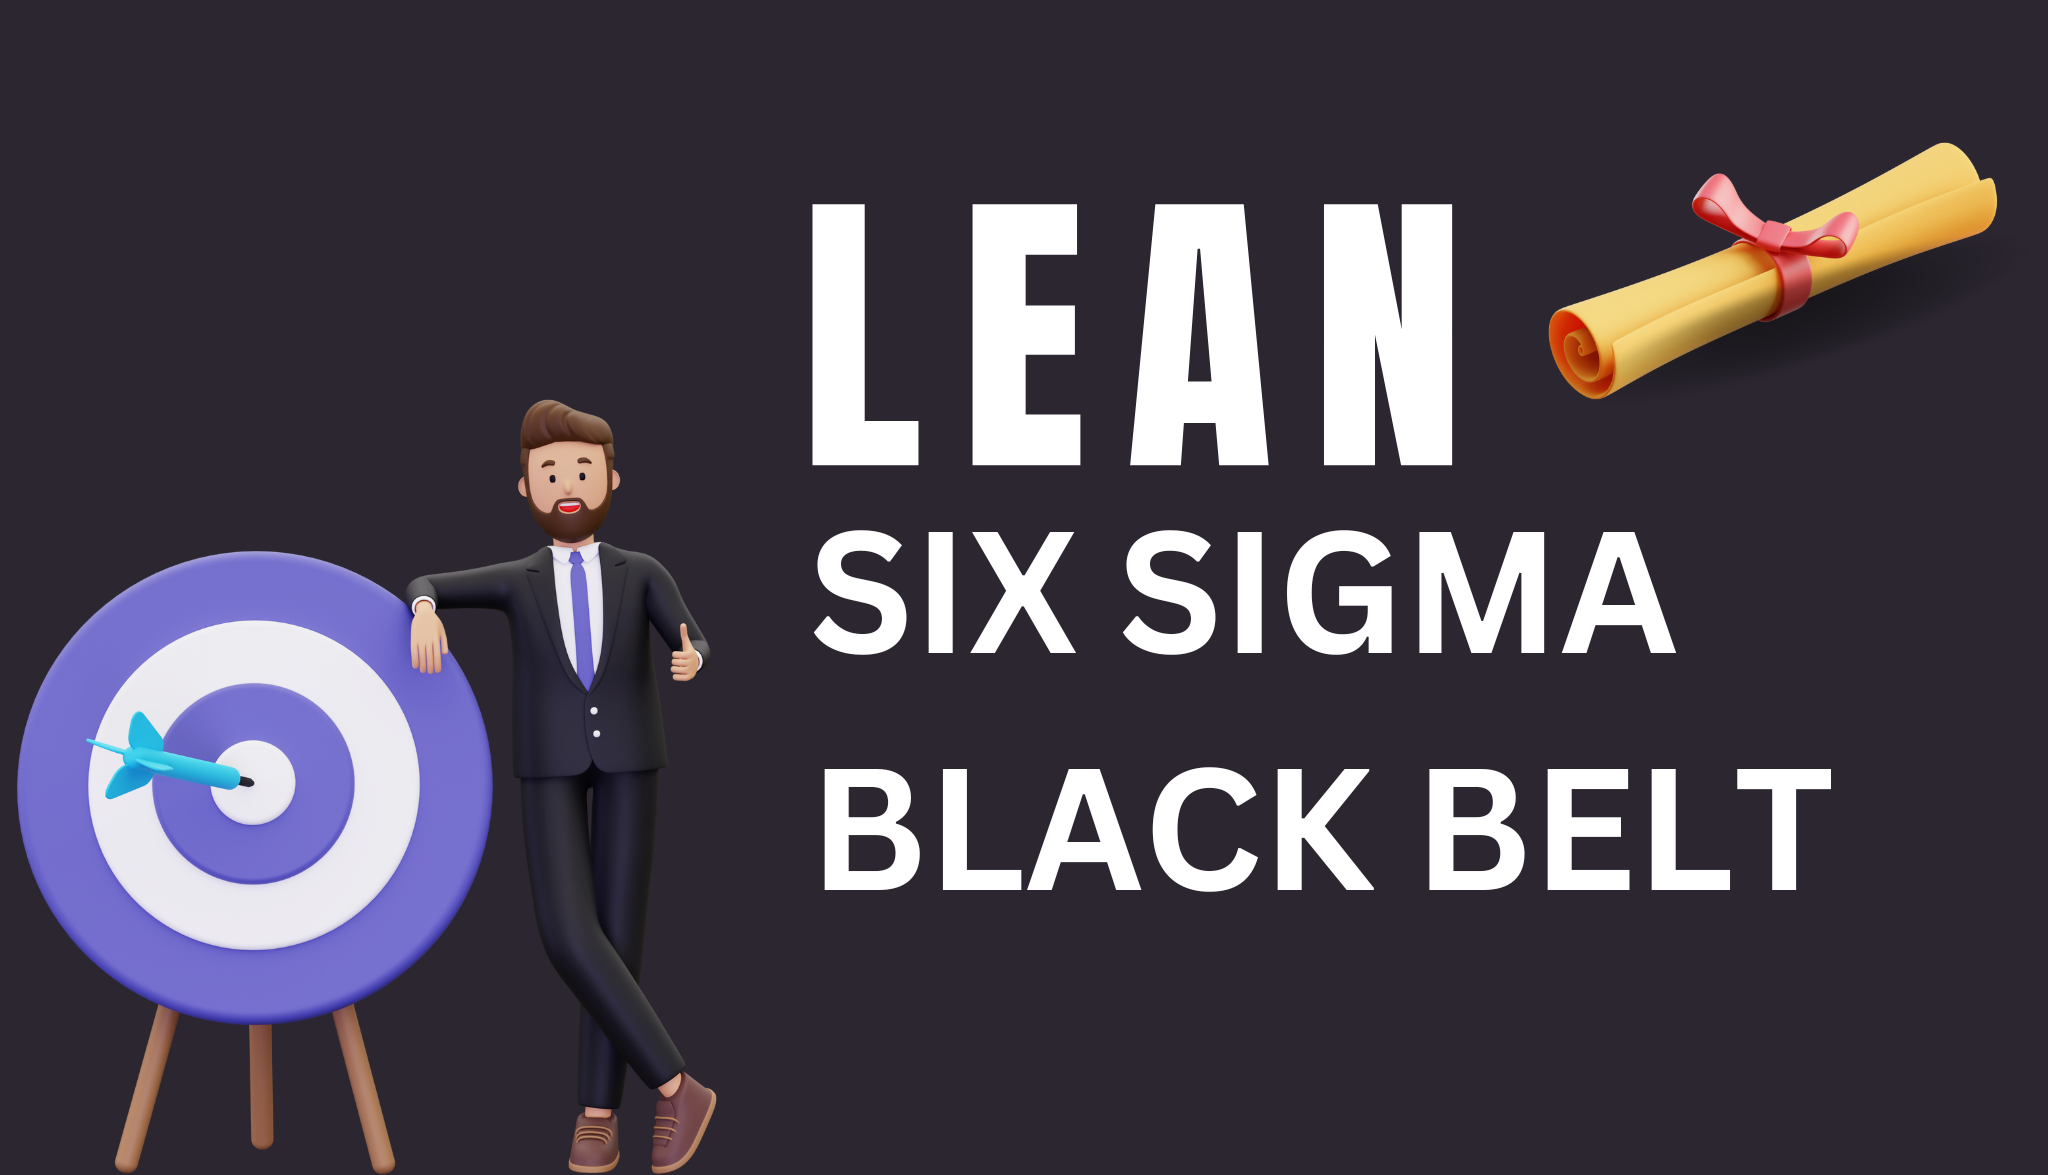 Lean Six Sigma Black belt certification